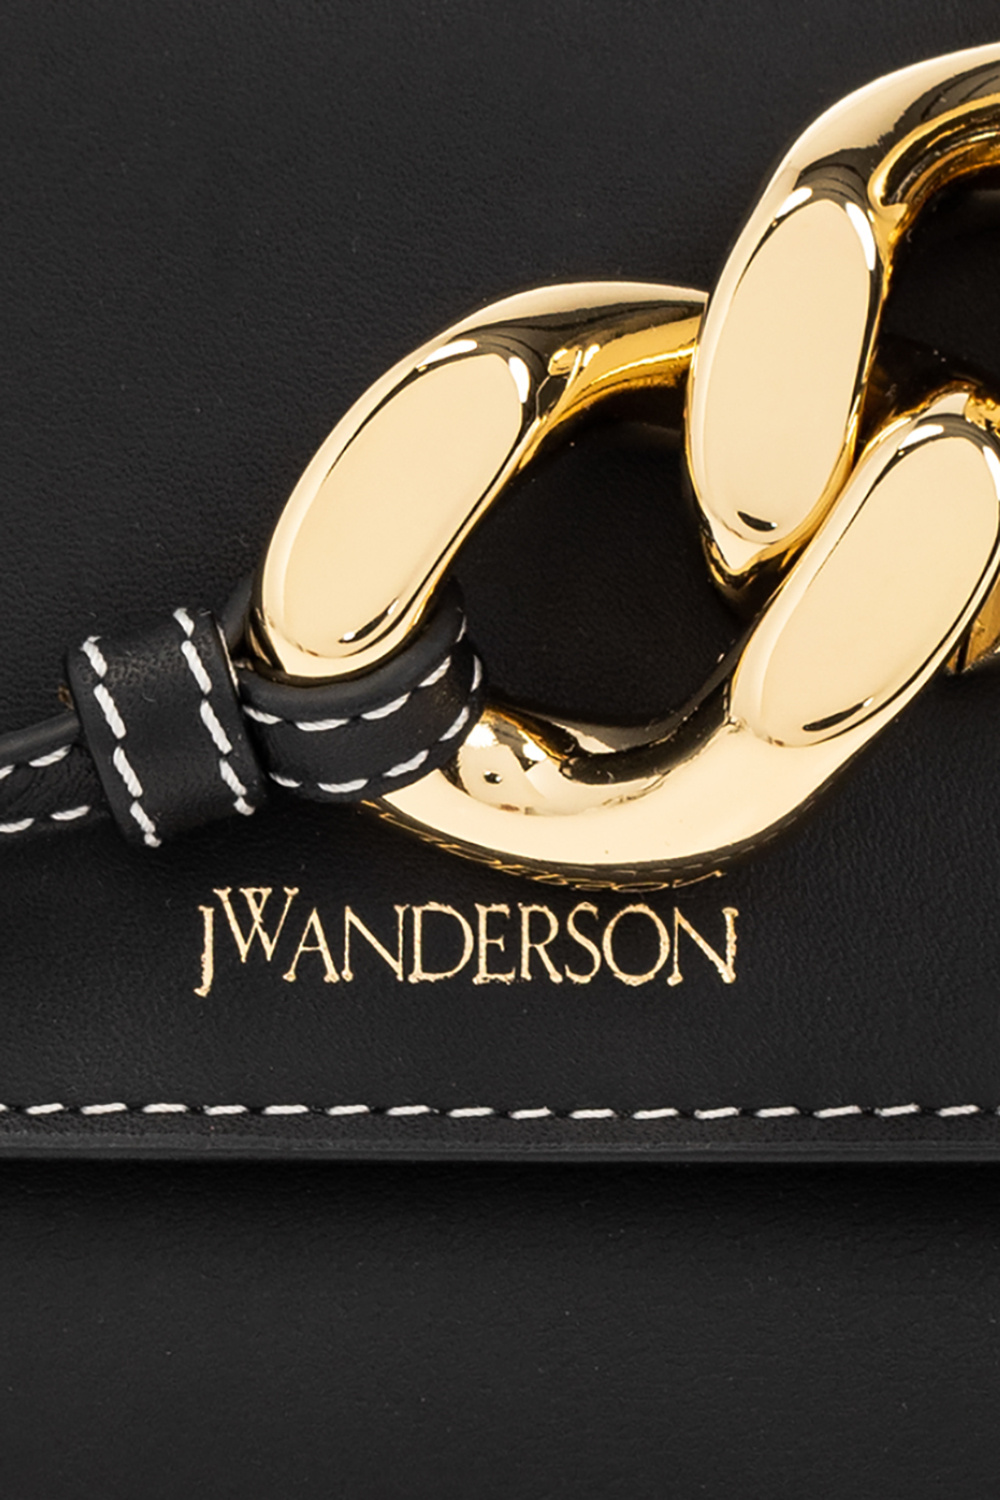 JW Anderson Gianni logo tote bag